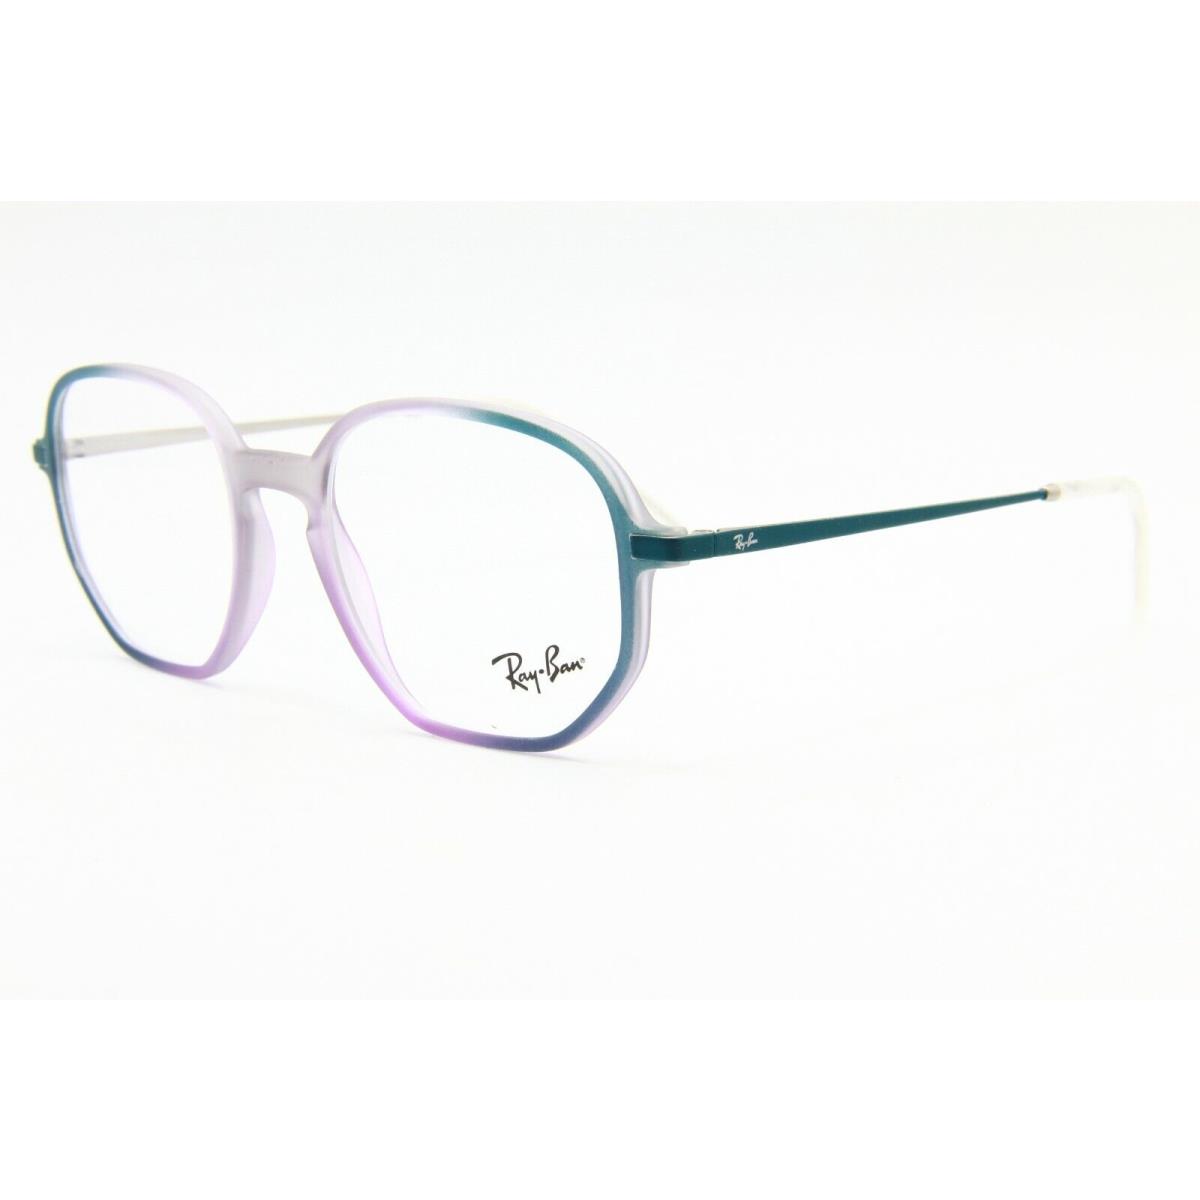 Ray-ban RB7152 5790 Purple Eyeglasses Frame RB 7152 52-19